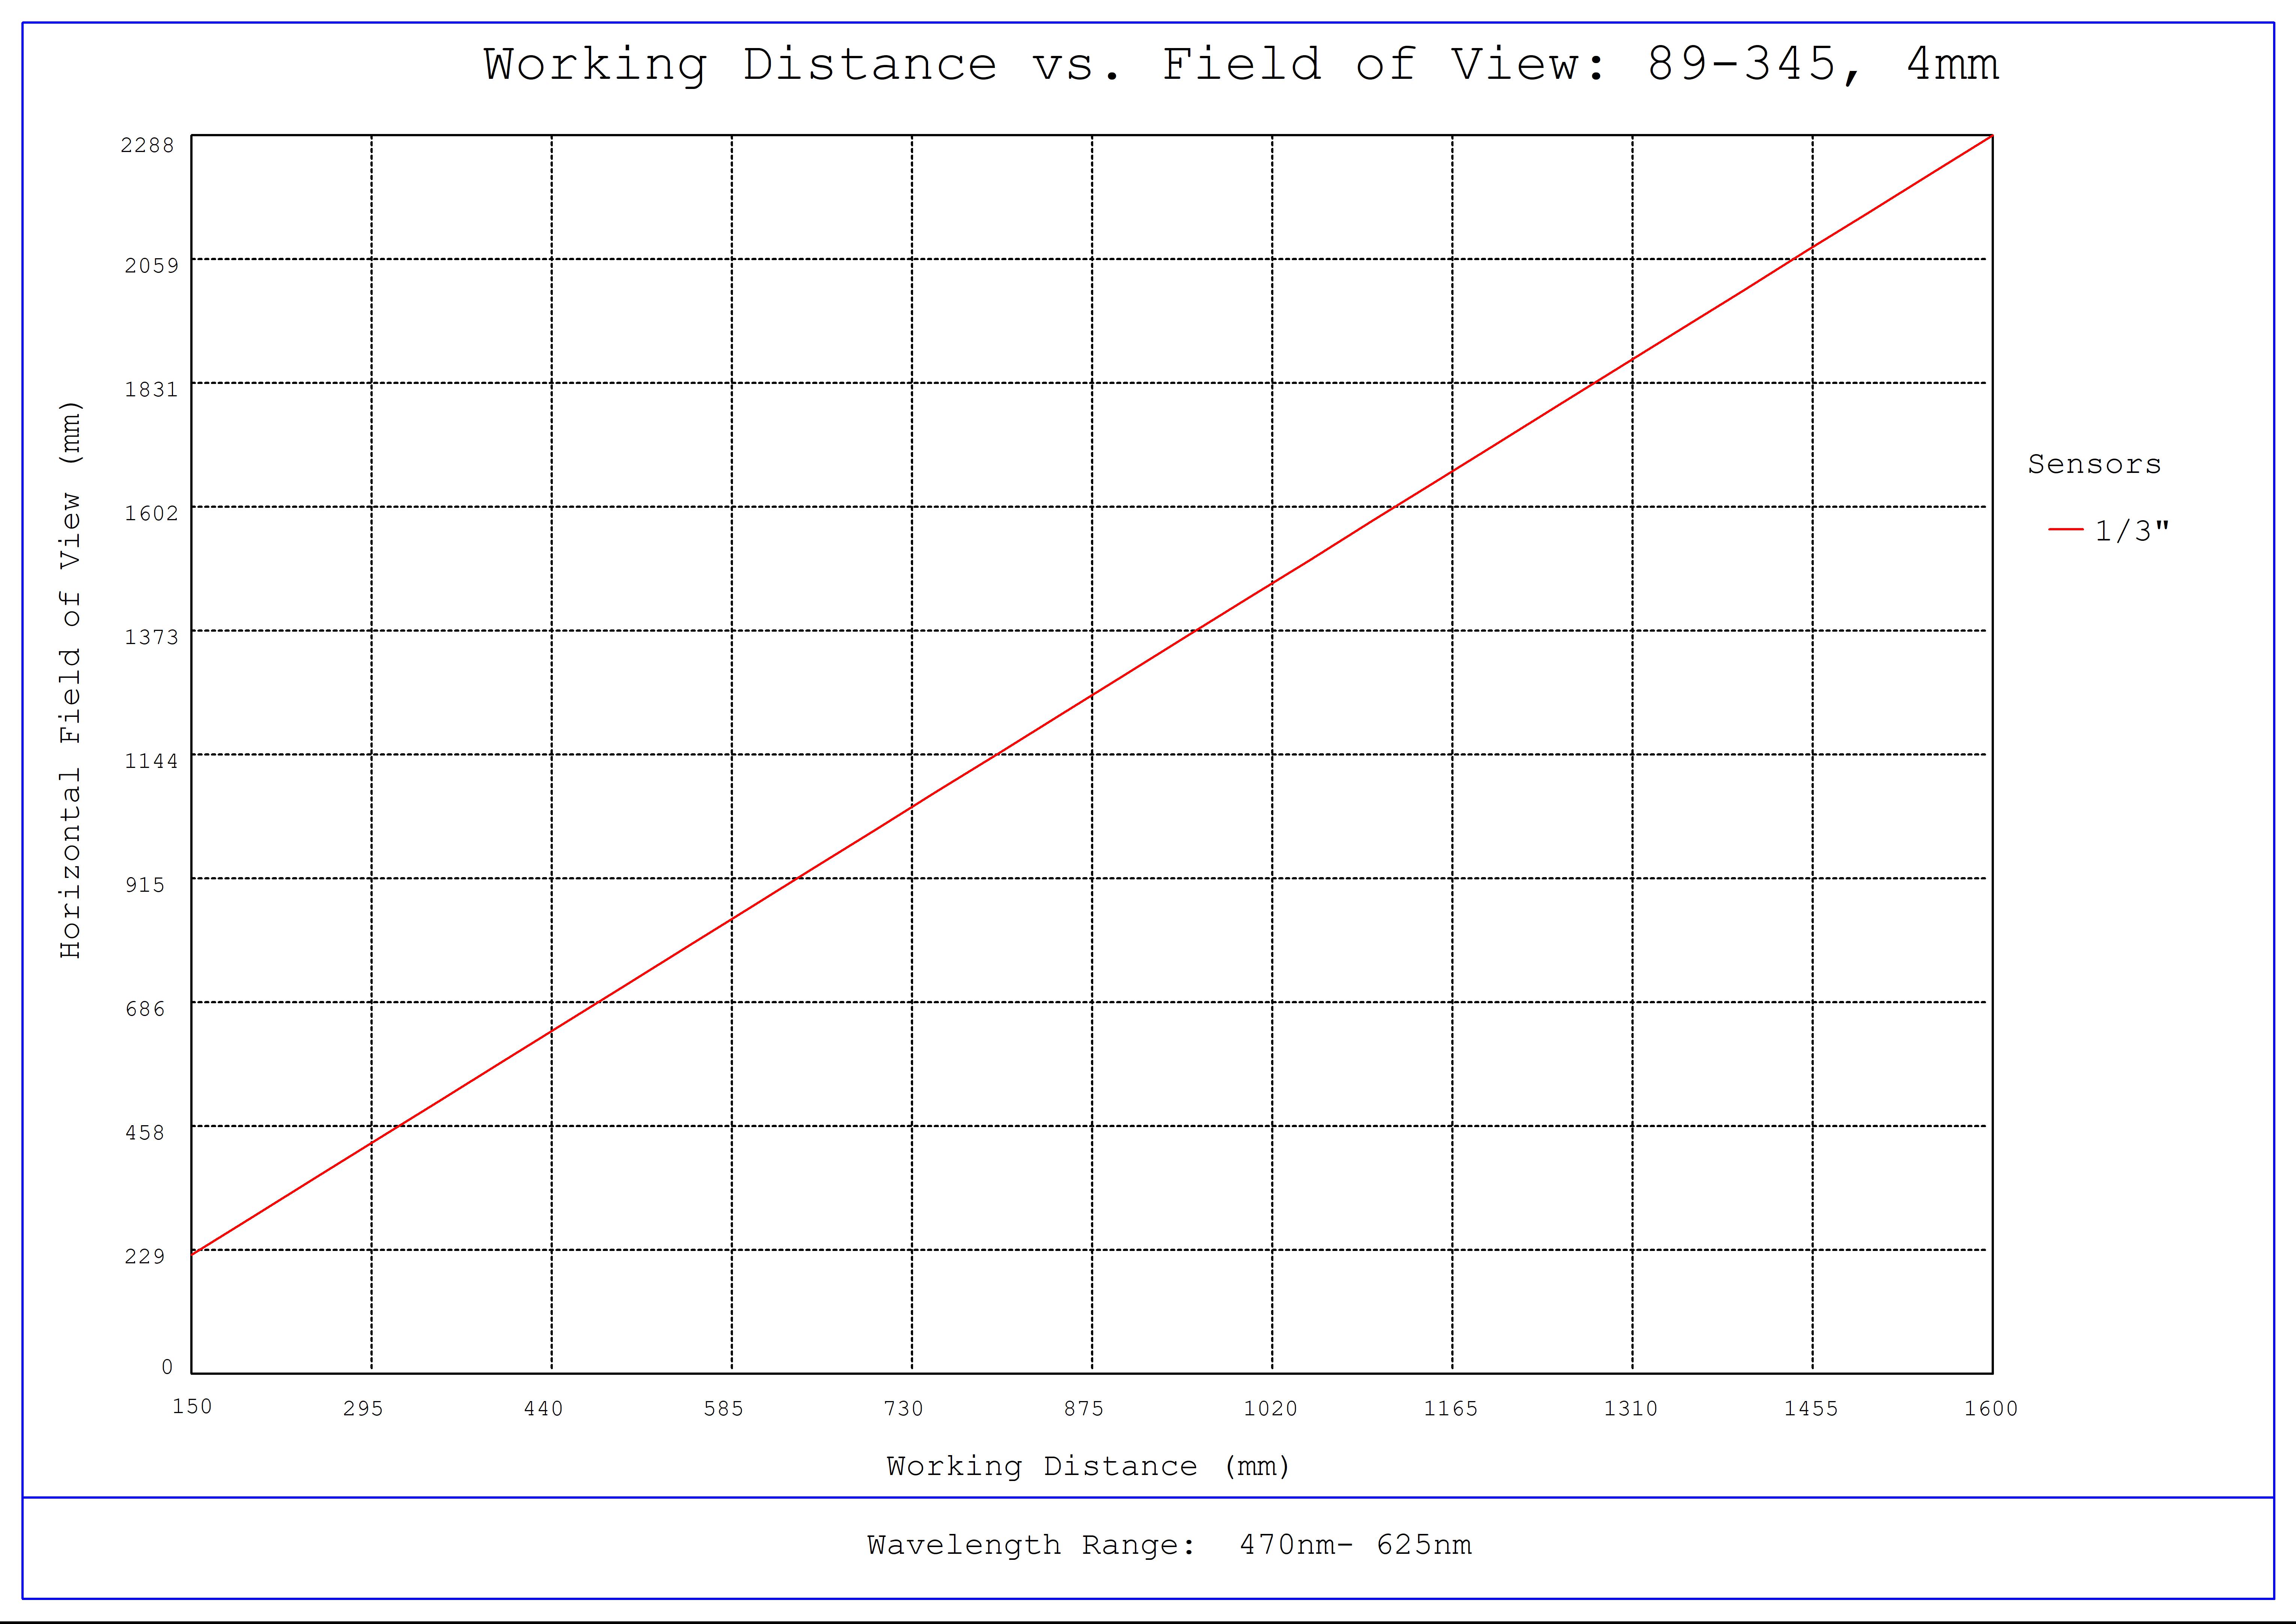 #89-345, 4mm FL f/4.0, Blue Series M12 Lens, Working Distance versus Field of View Plot